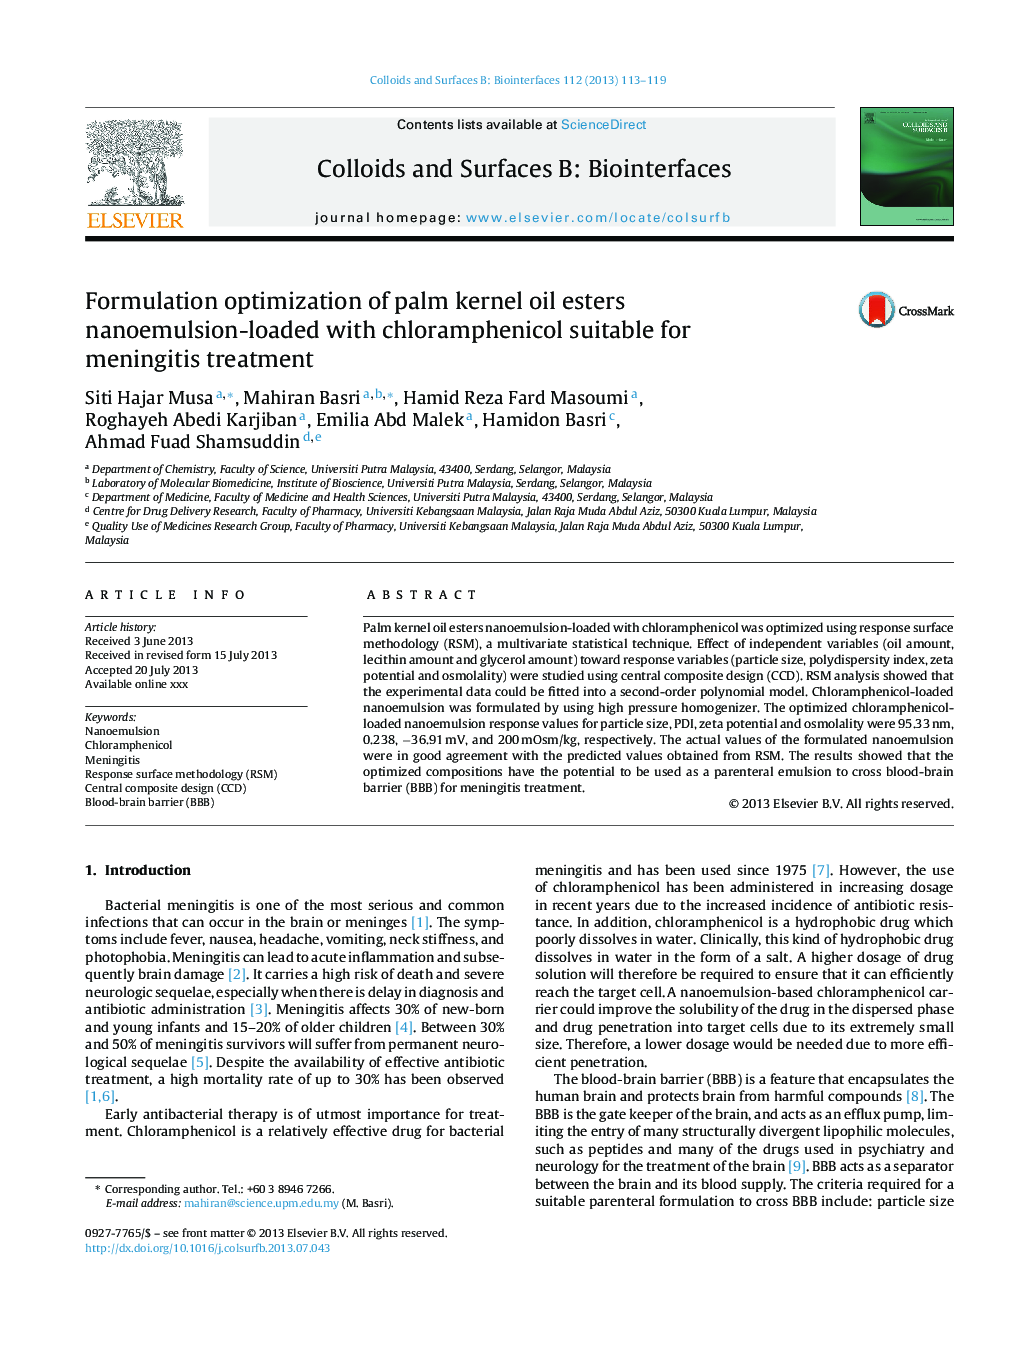 Formulation optimization of palm kernel oil esters nanoemulsion-loaded with chloramphenicol suitable for meningitis treatment